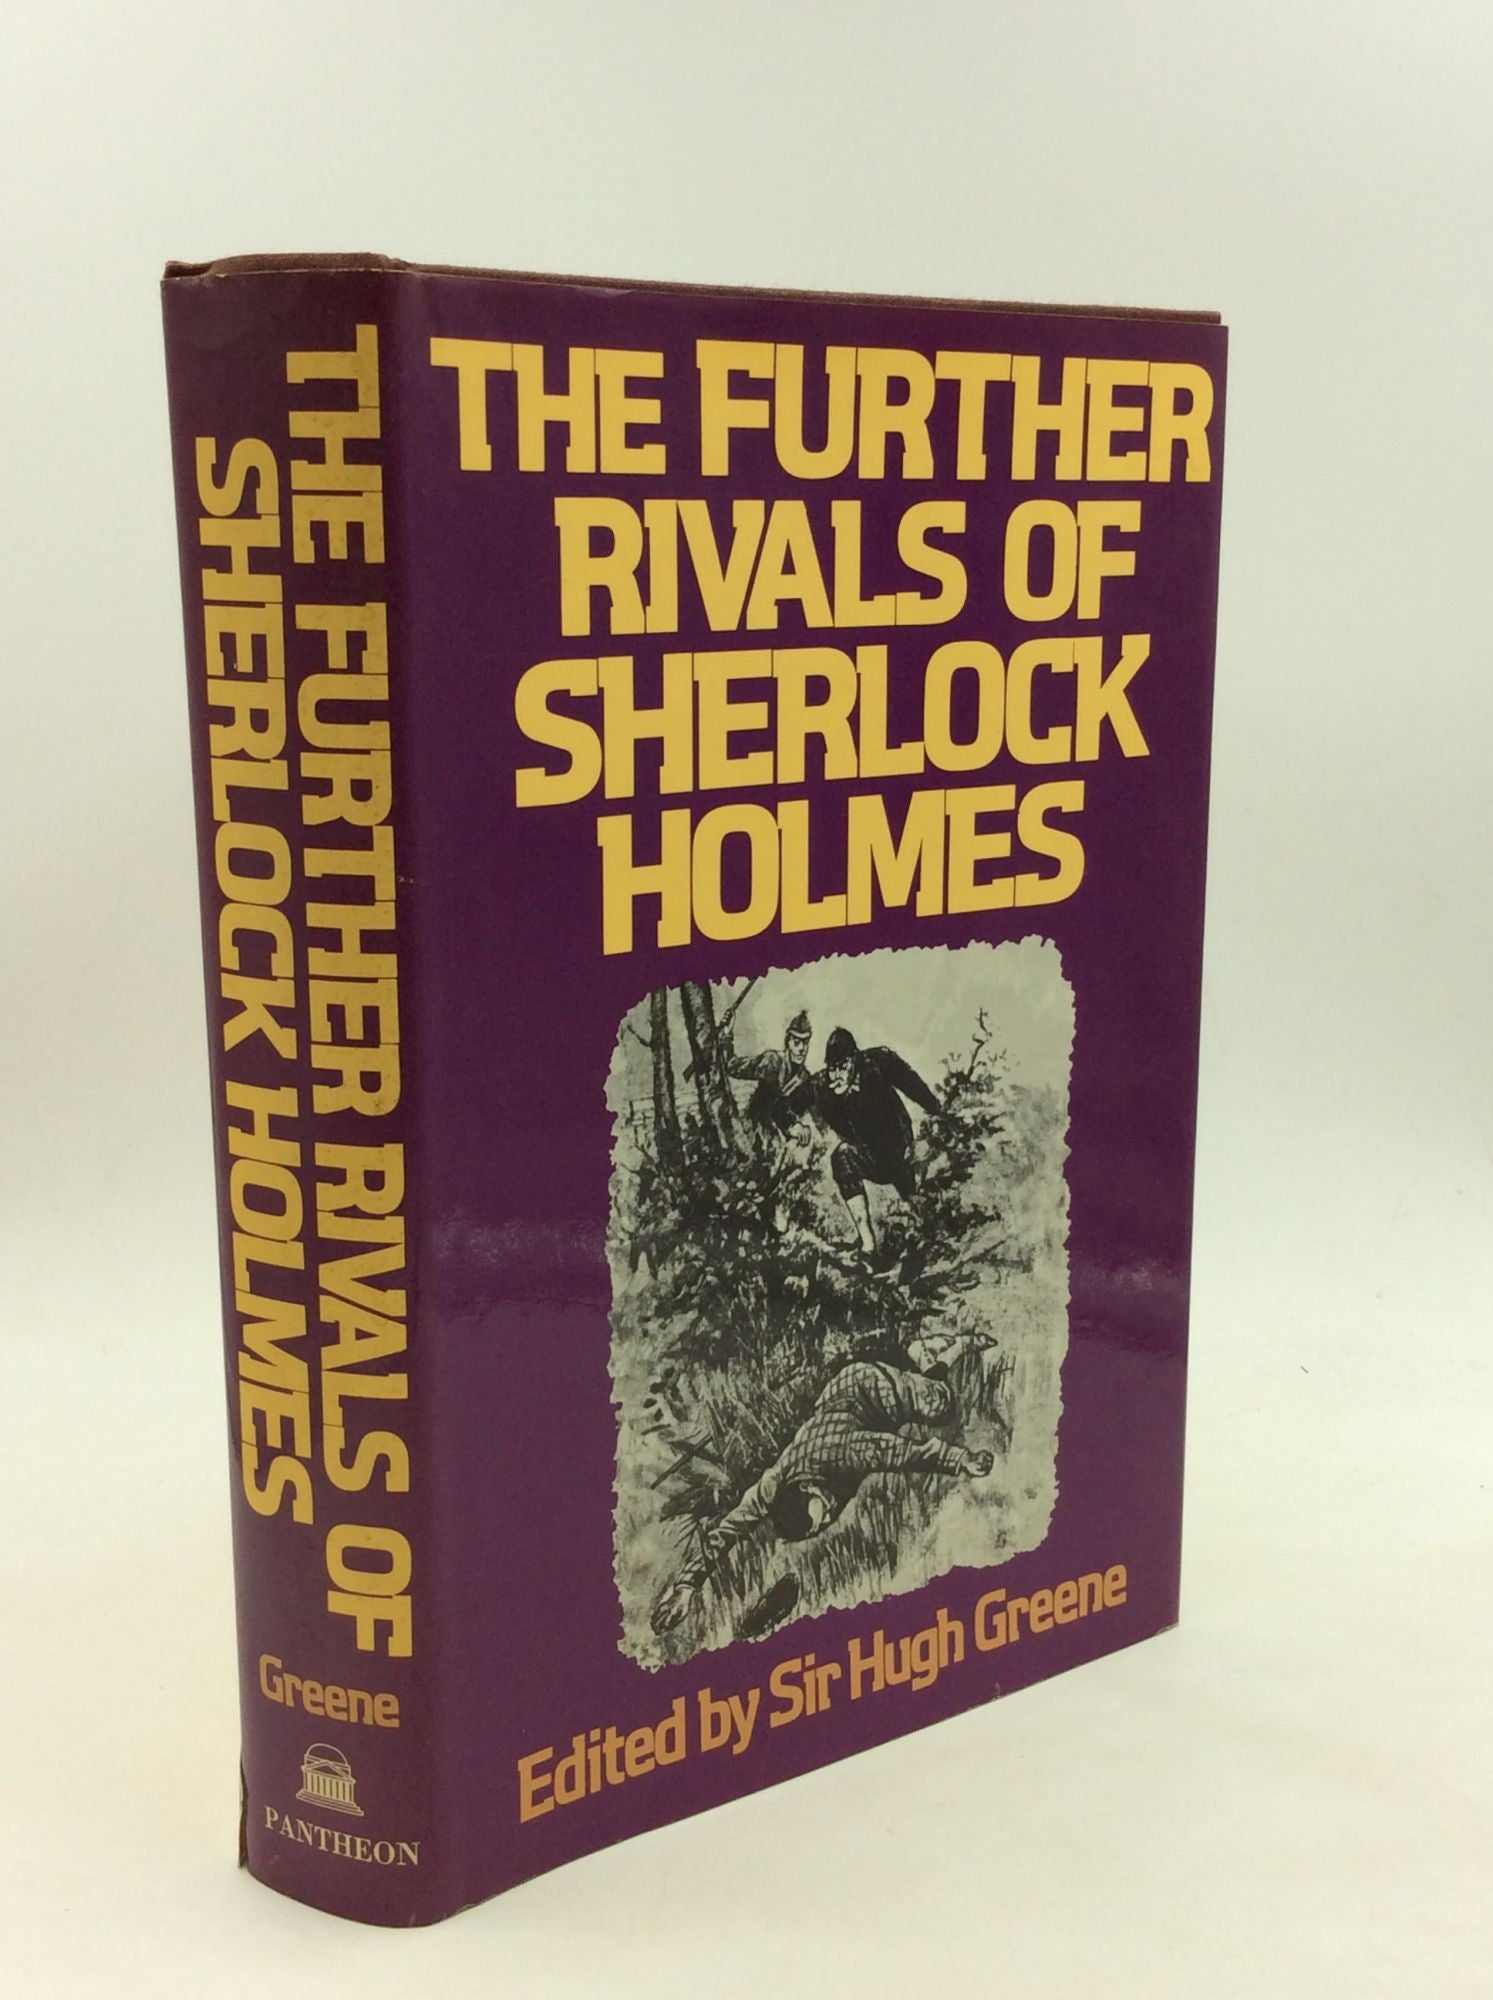 Sir Hugh Greene, ed - The Further Rivals of Sherlock Holmes